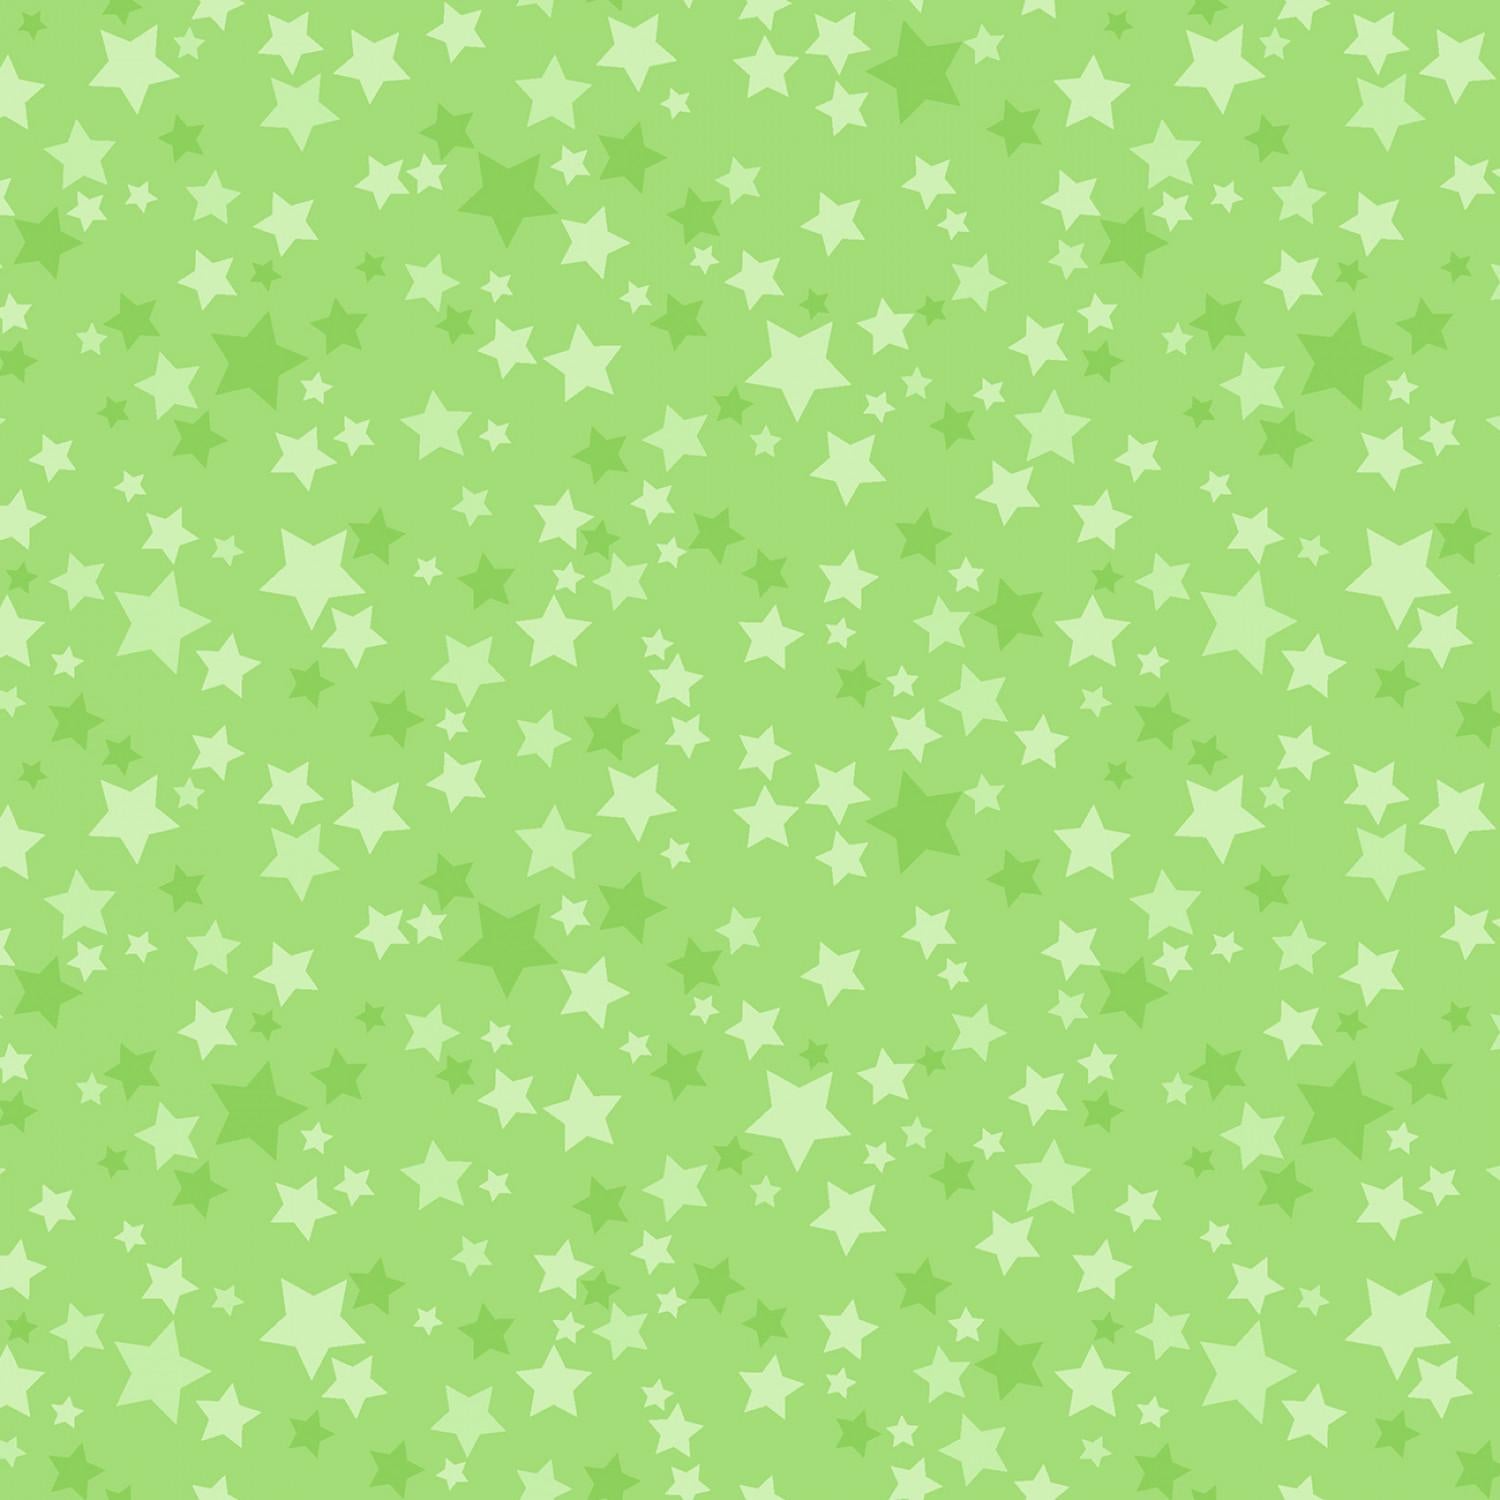 Playtime Flannel - Stars - Green - MASF10692-G